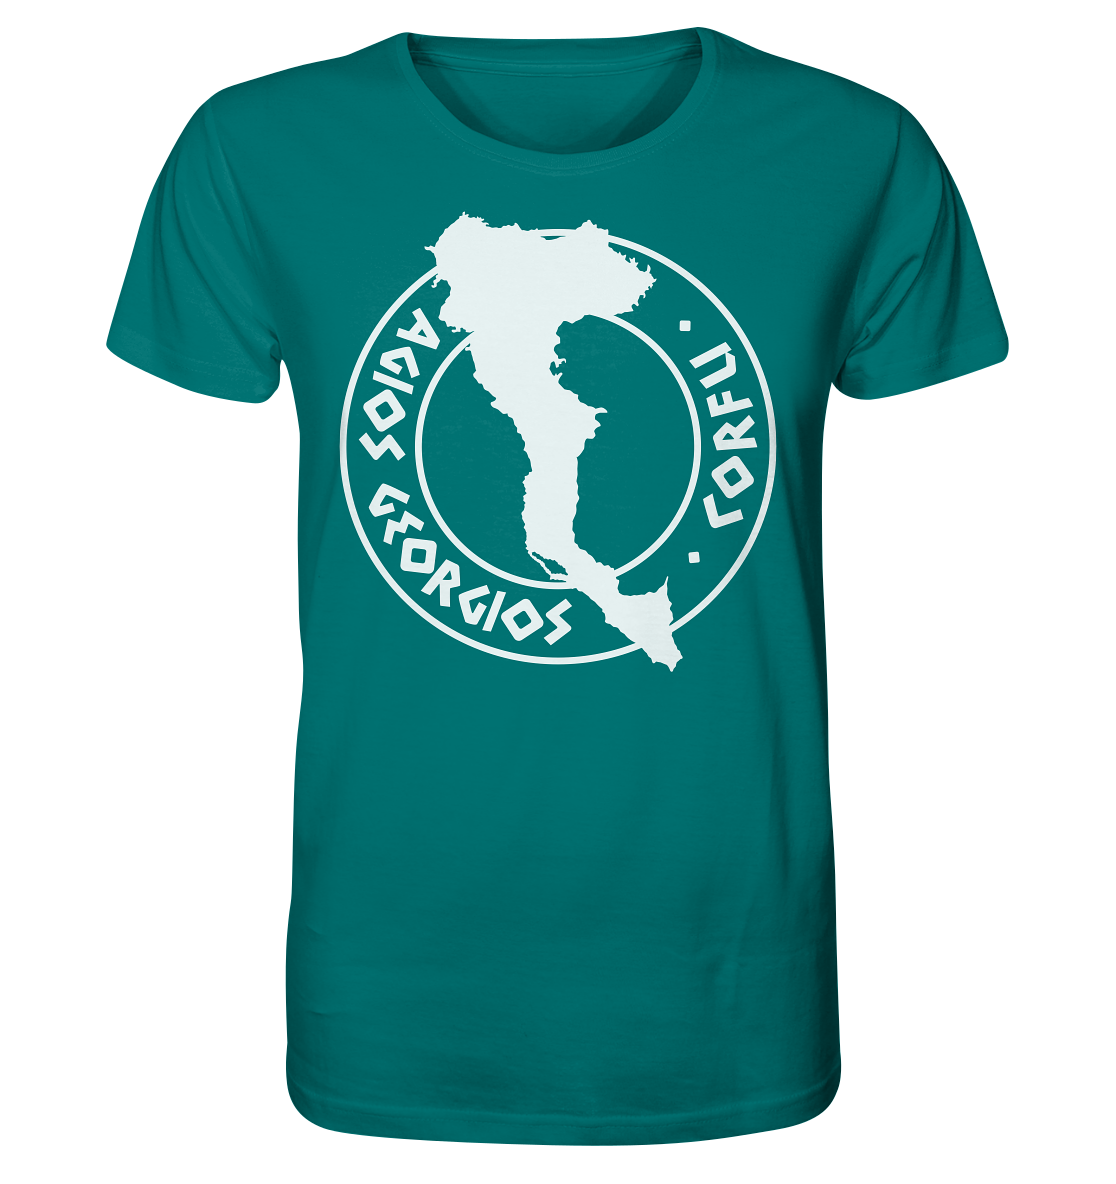 Corfu Agios Georgios Silhouette Stempel - Organic Shirt